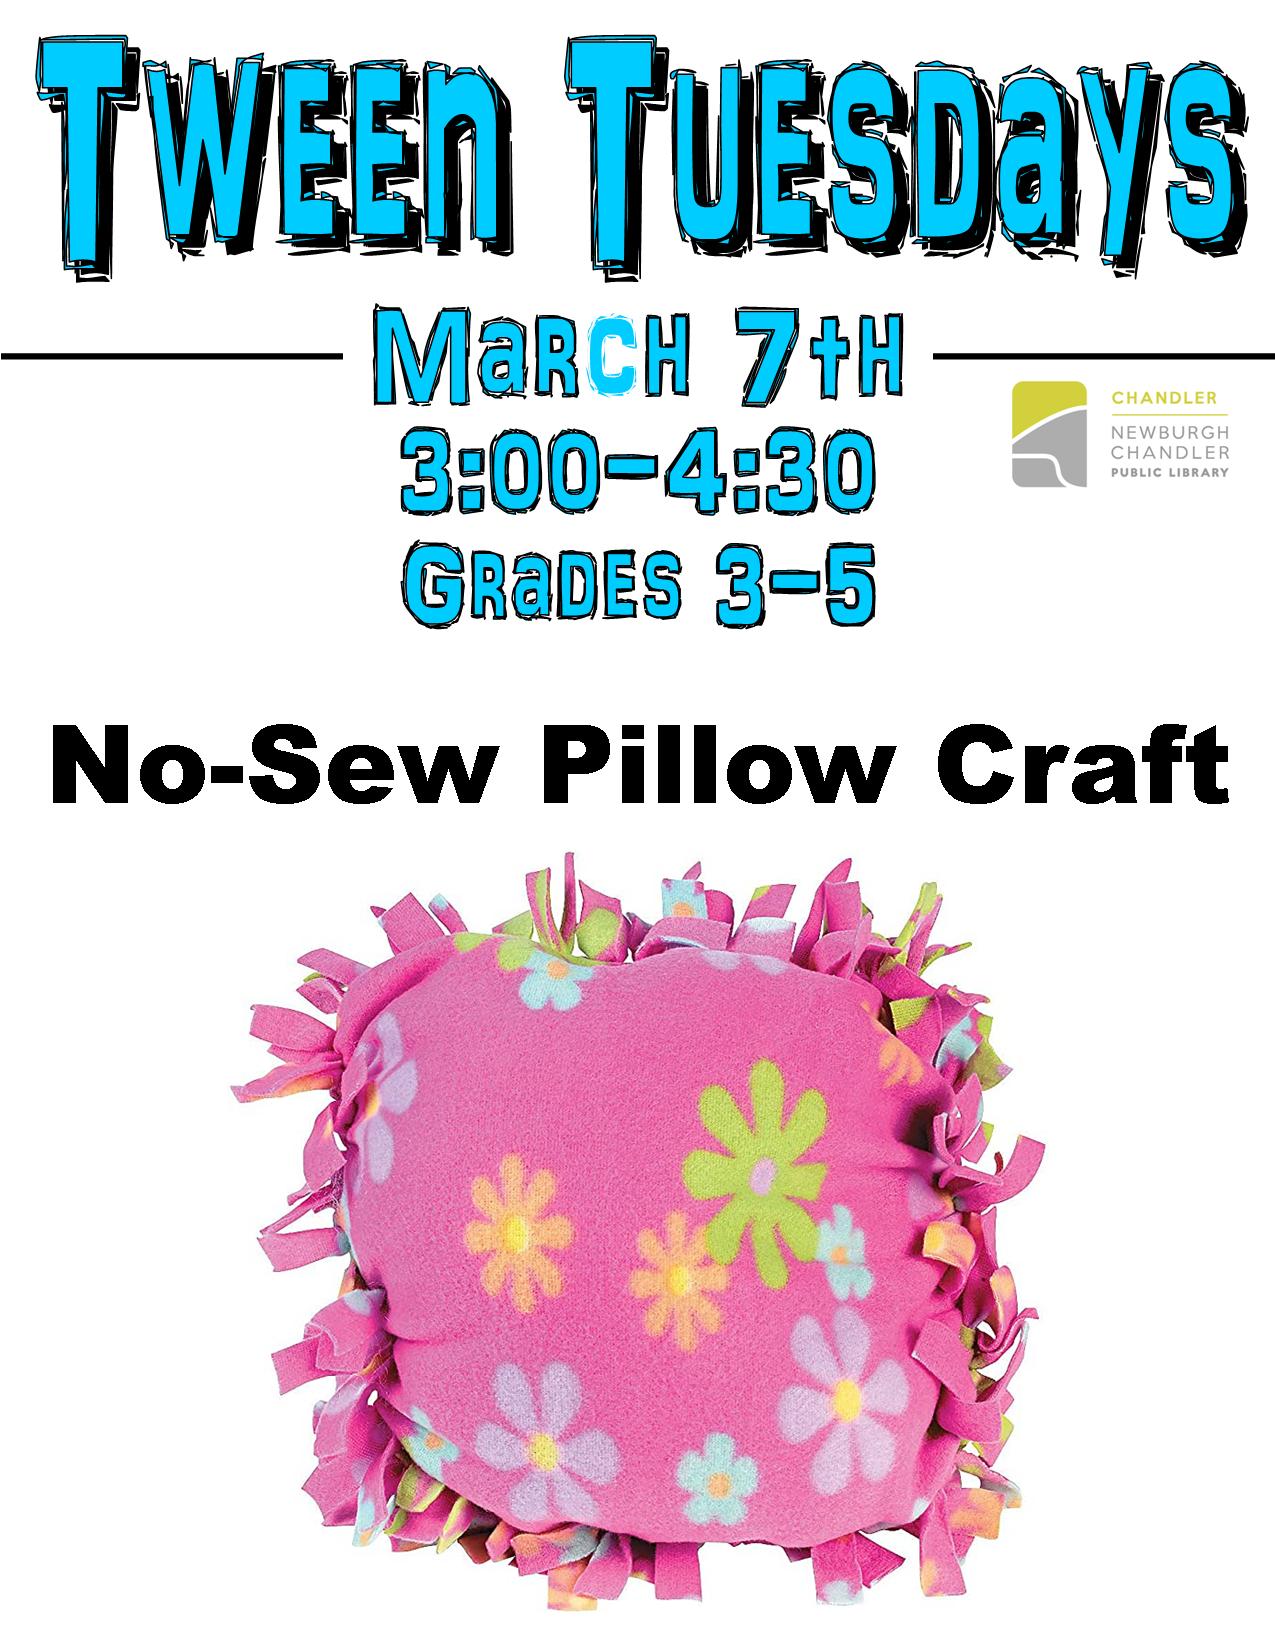 Tween Tuesdays: No-Sew Pillow Craft @ Chandler Library Children's Department | Chandler | Indiana | United States